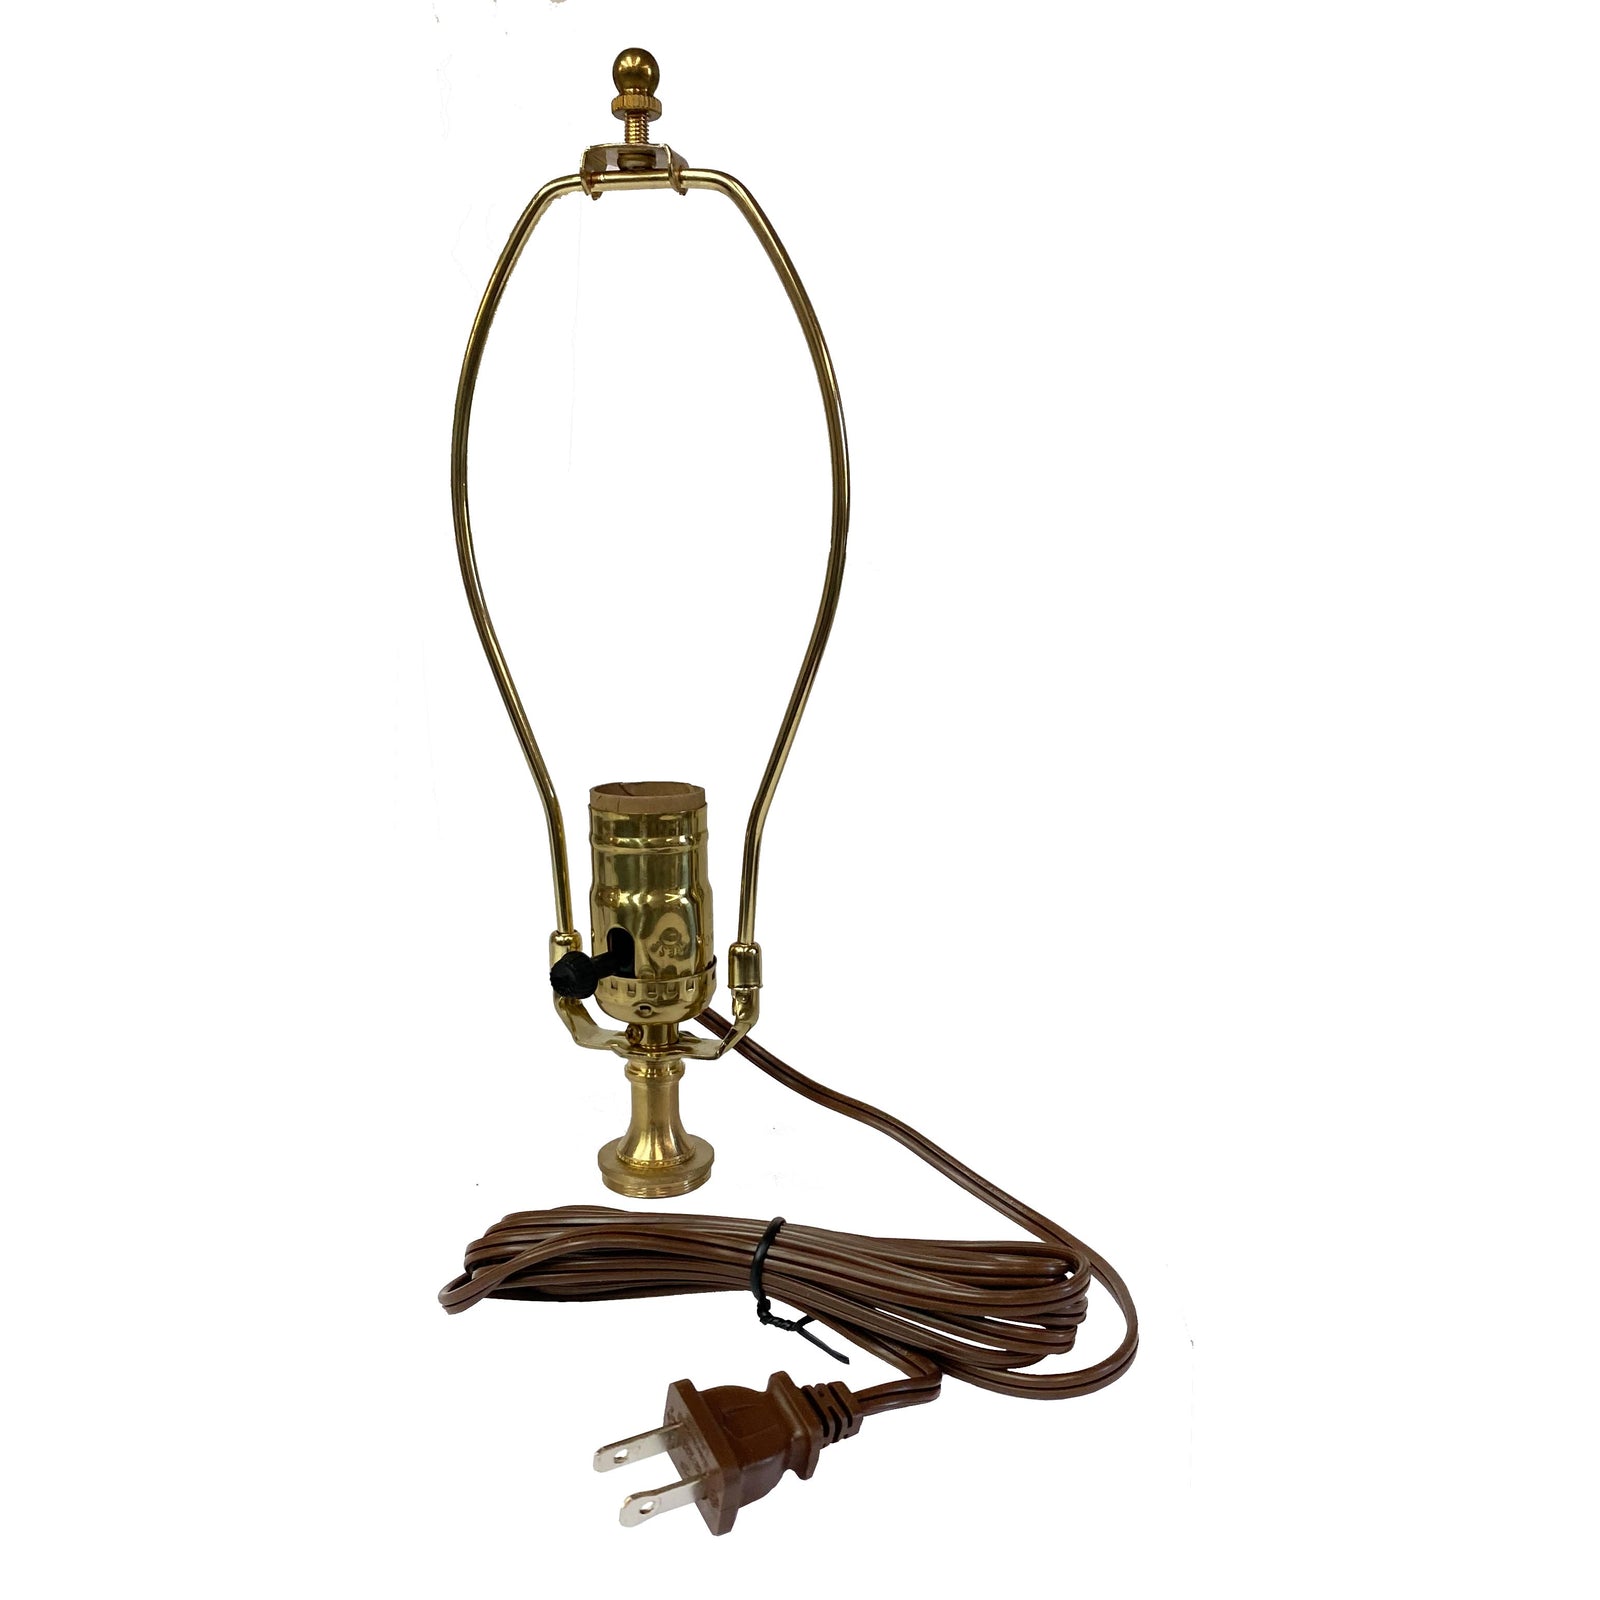 Brass Lamp Sockets, Side Mount - Paxton Hardware